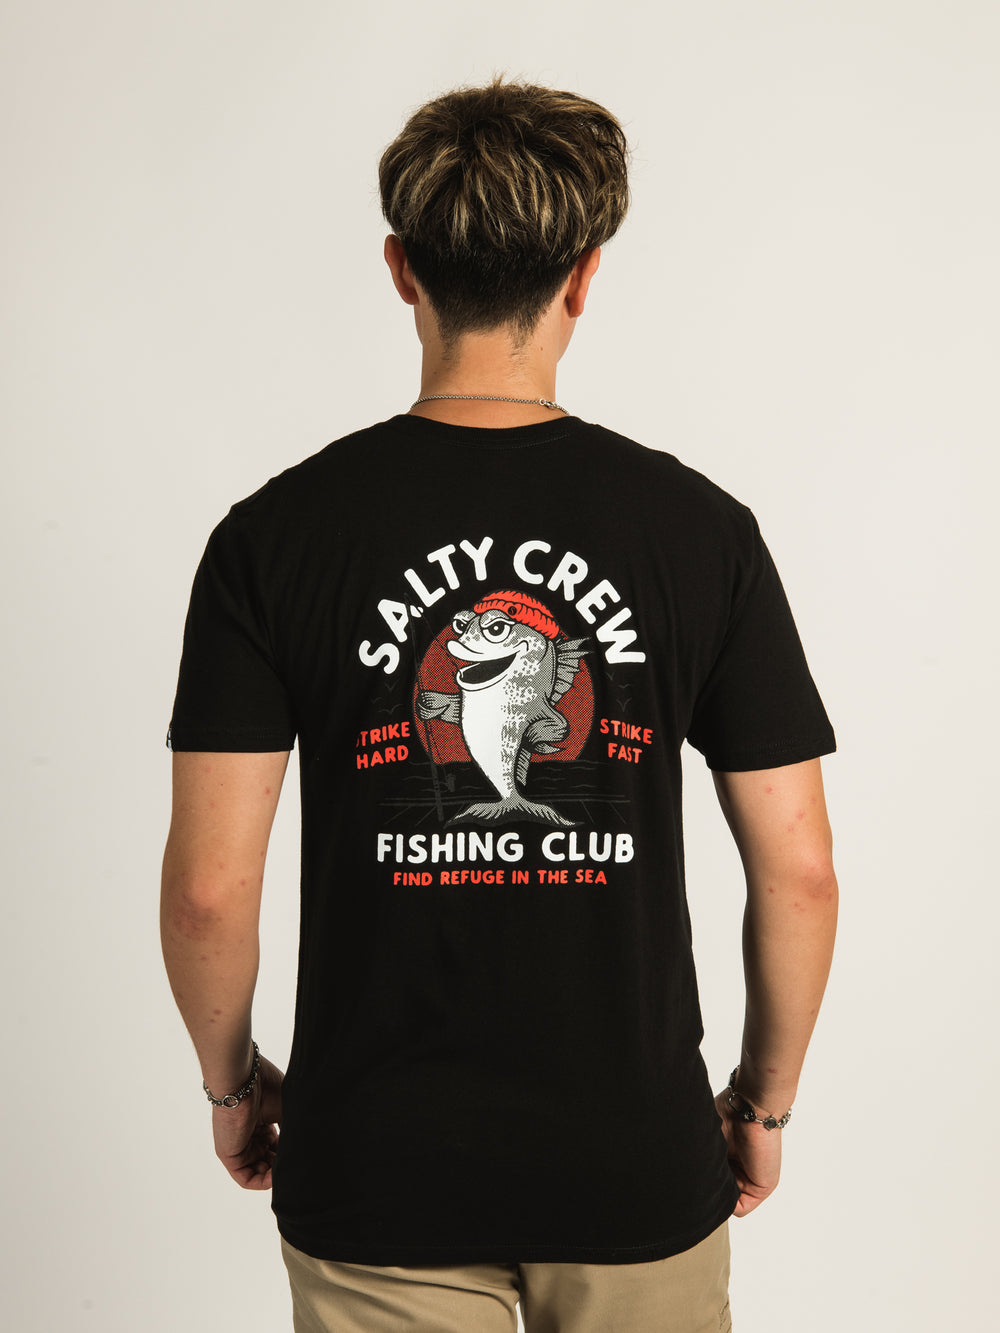 T-SHIRT STANDARD SALTY CREW FISHING CLUB